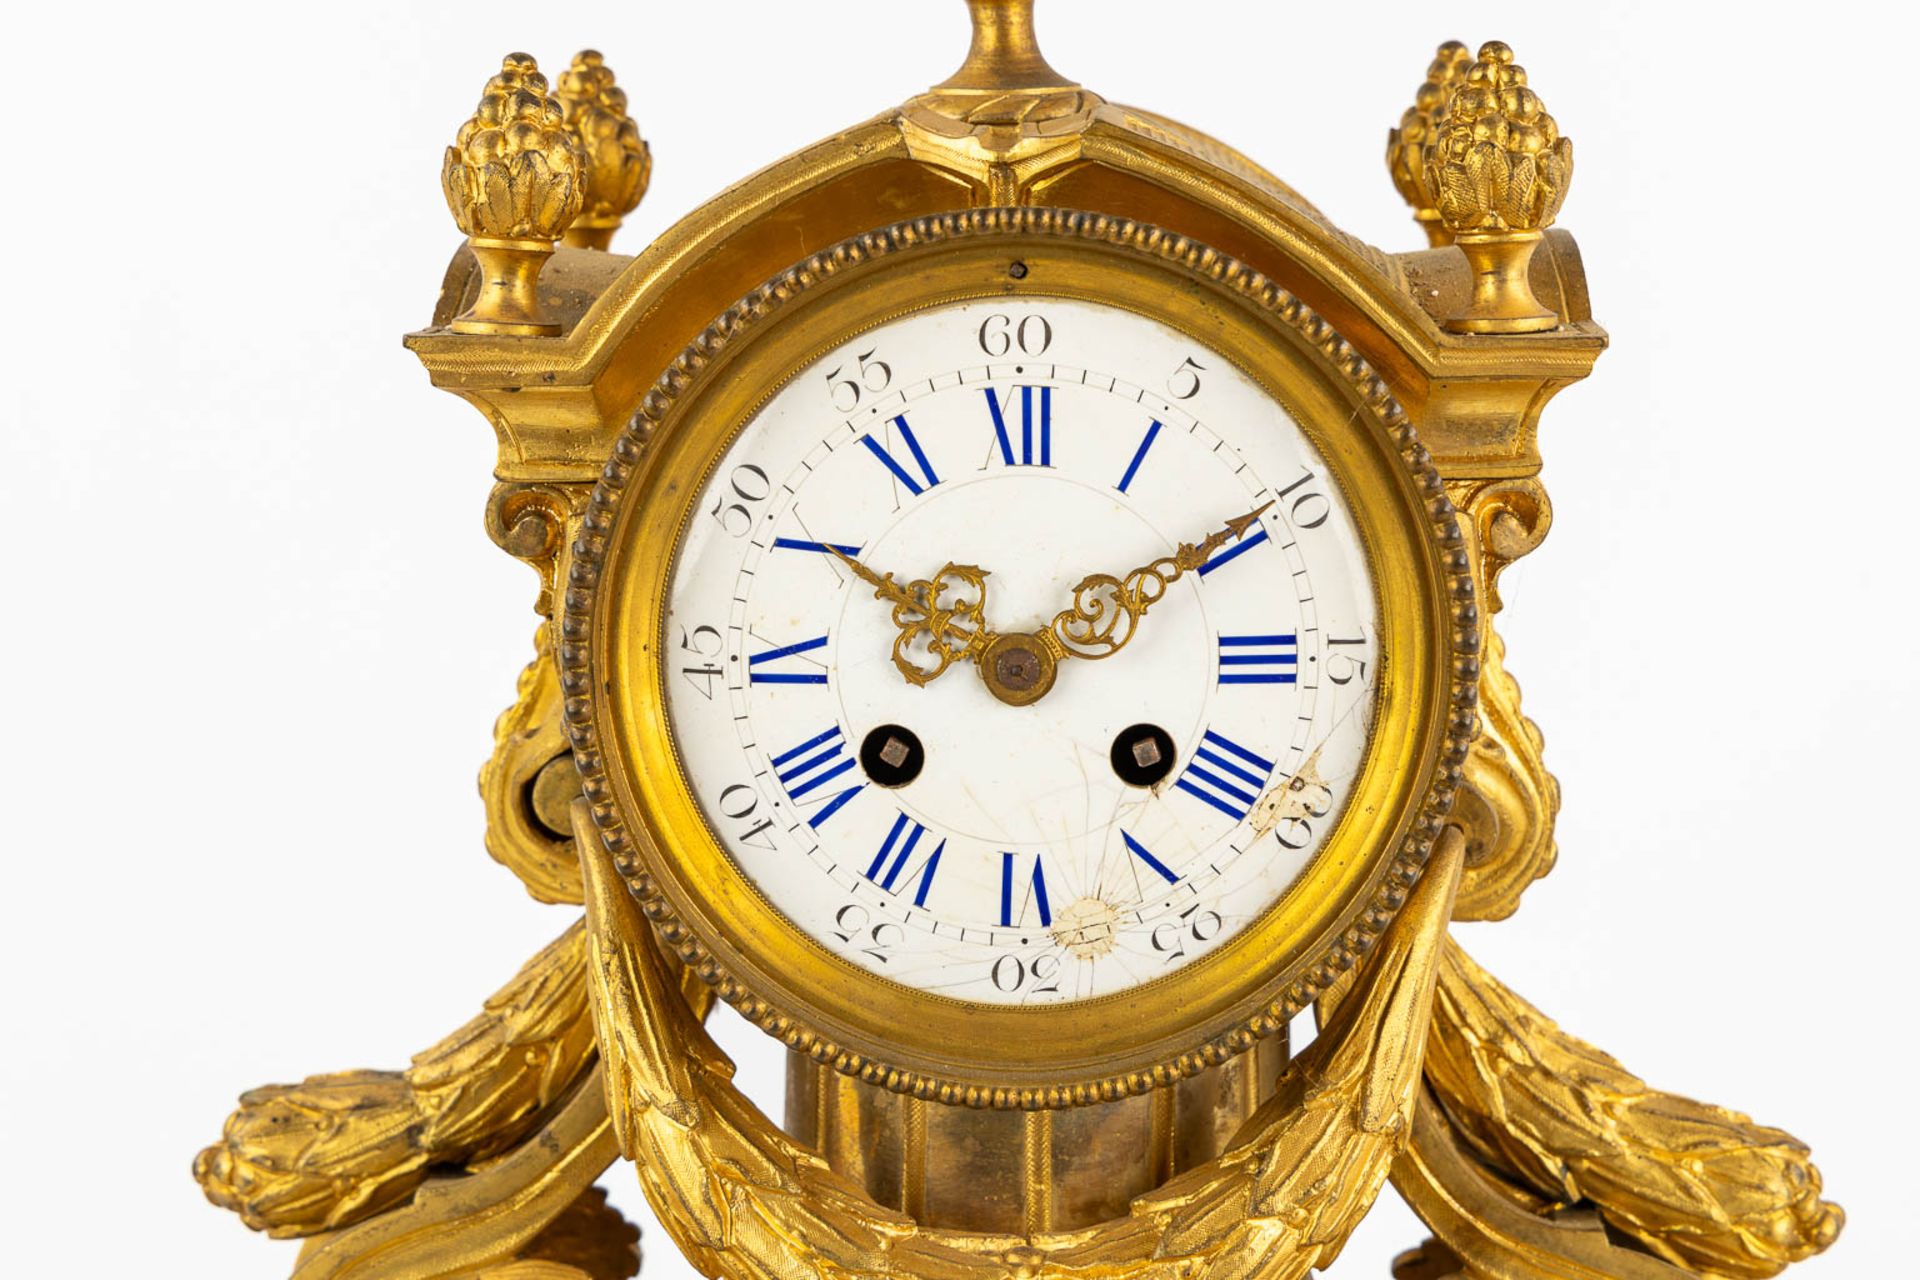 A three-piece mantle garniture clock and candelabra, gilt bronze. 19th C. (L:20 x W:32 x H:43 cm) - Image 11 of 13